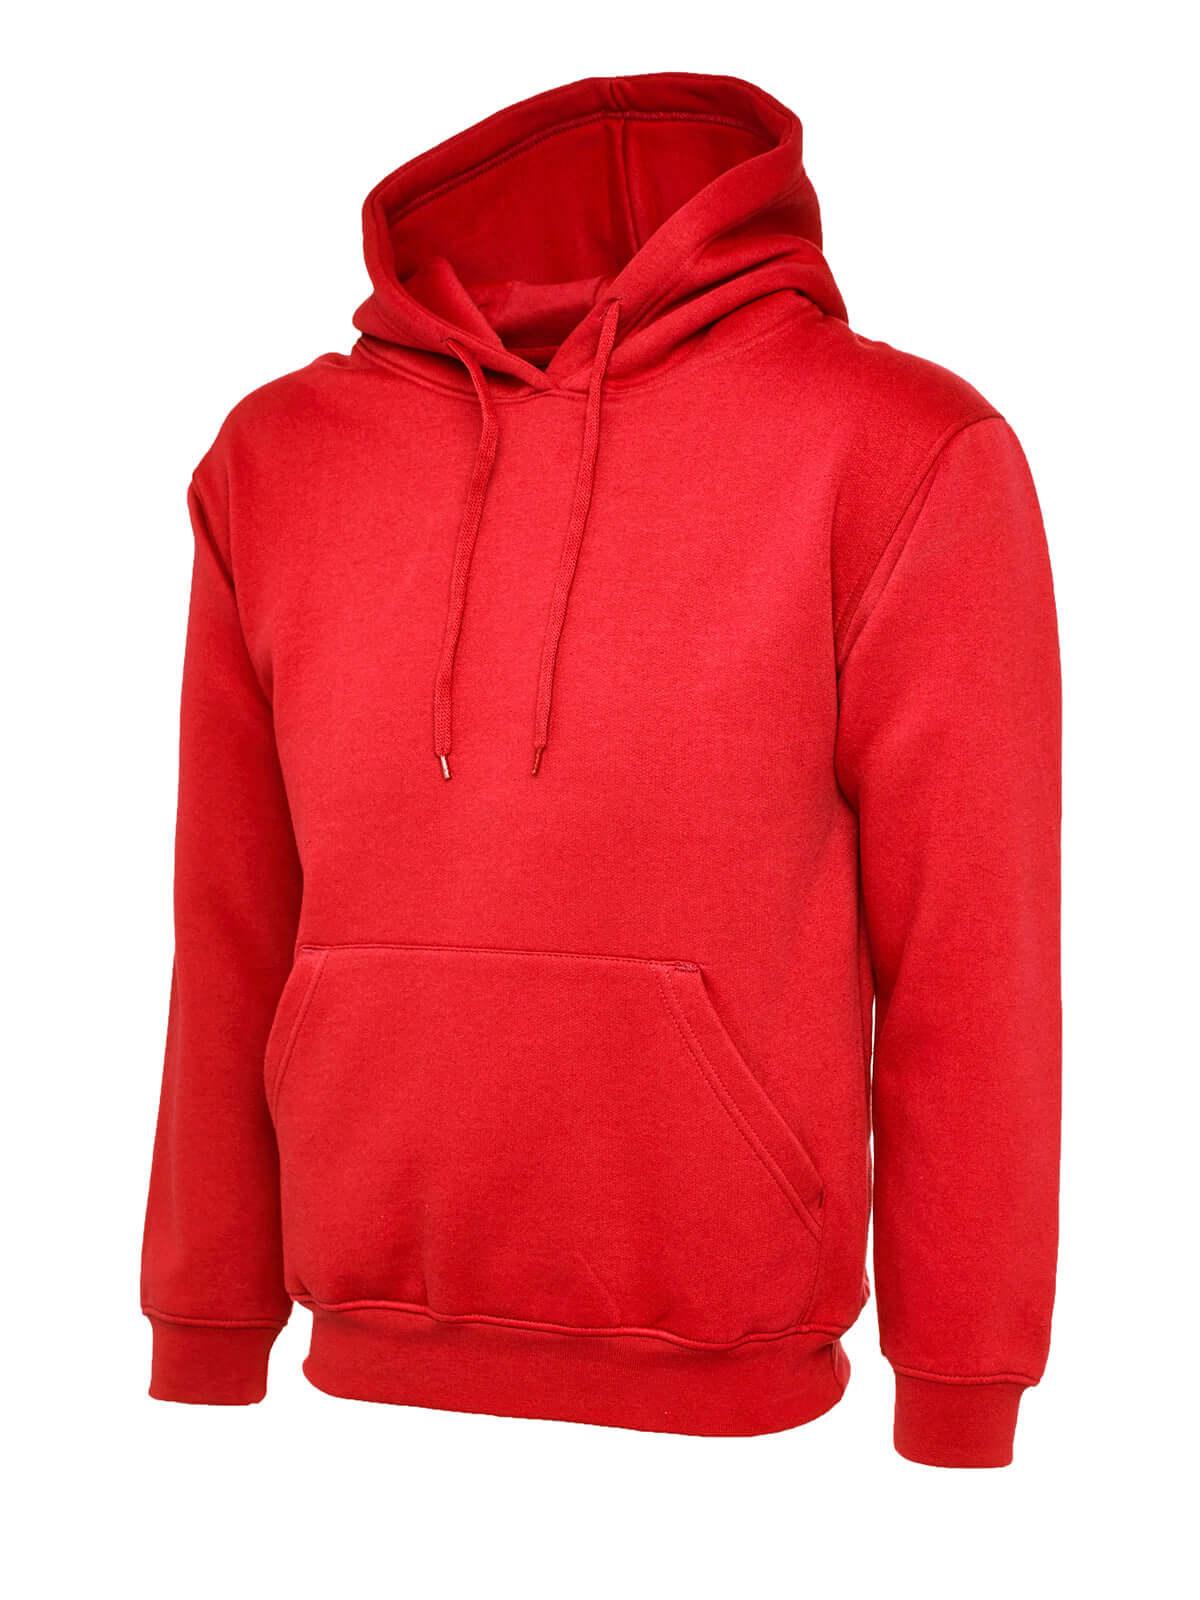 Pegasus Uniform Classic Hooded Sweatshirt - Red